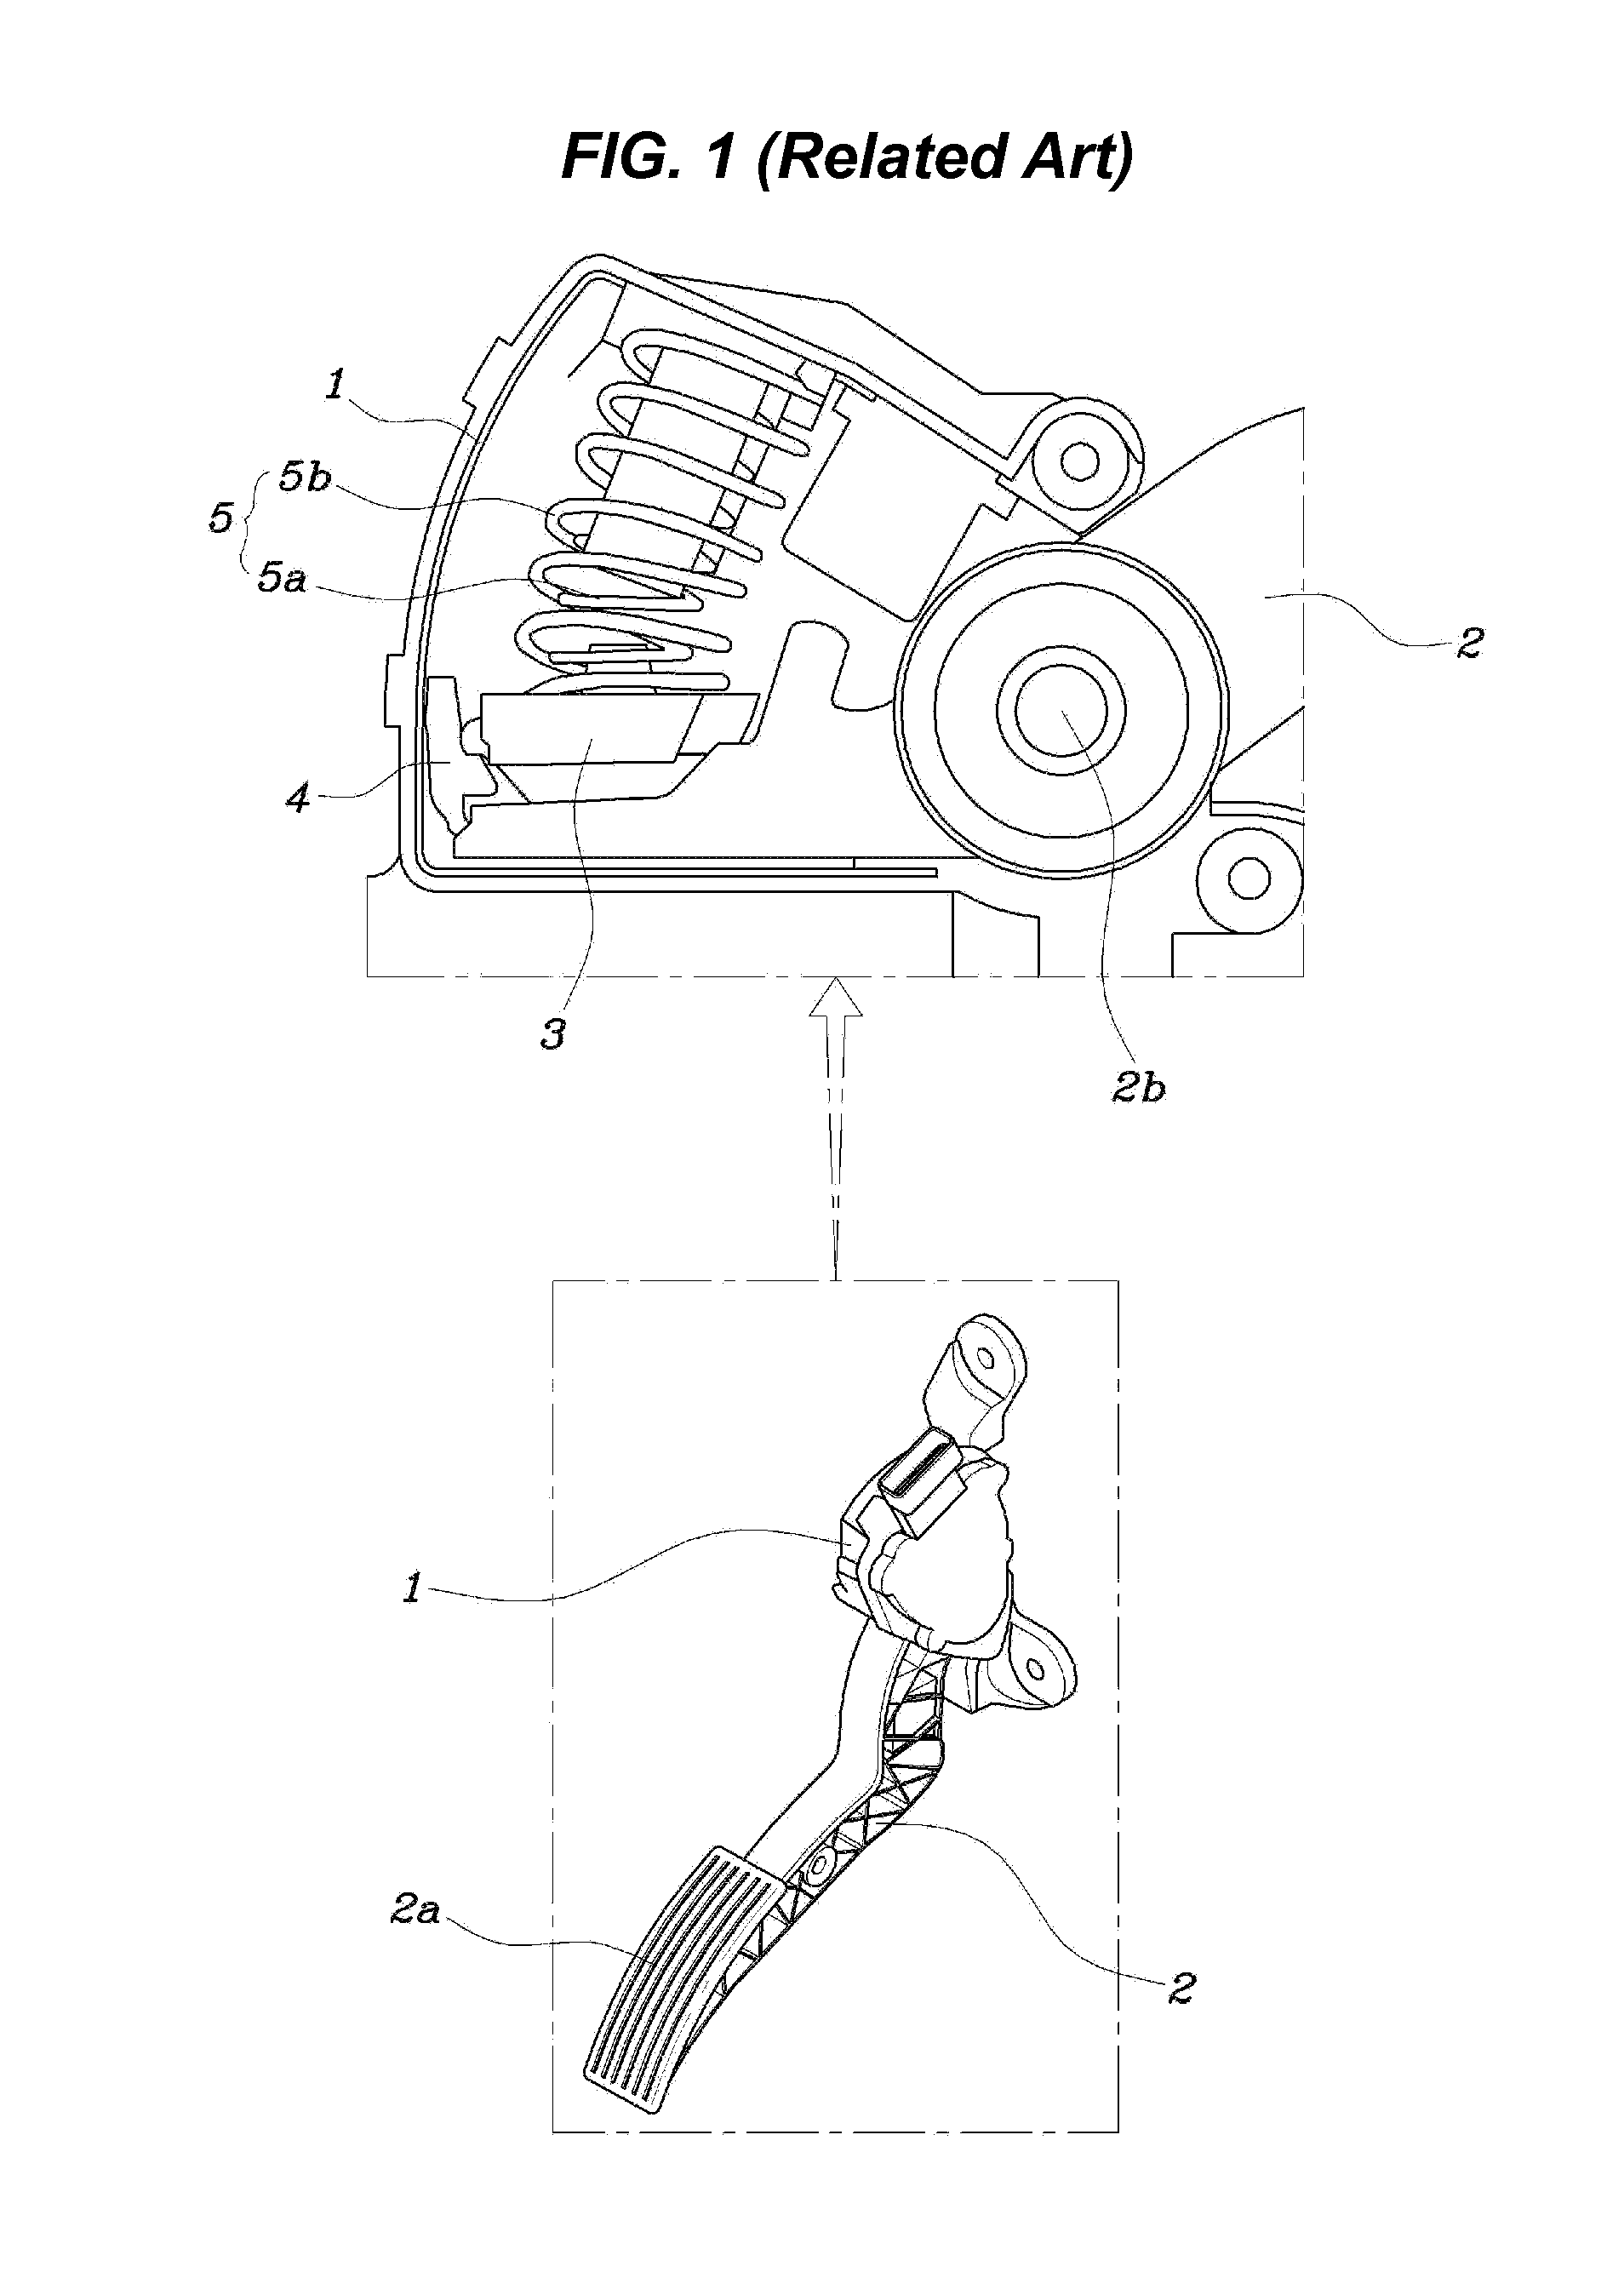 Pedal effort adjusting apparatus for accelerator pedal